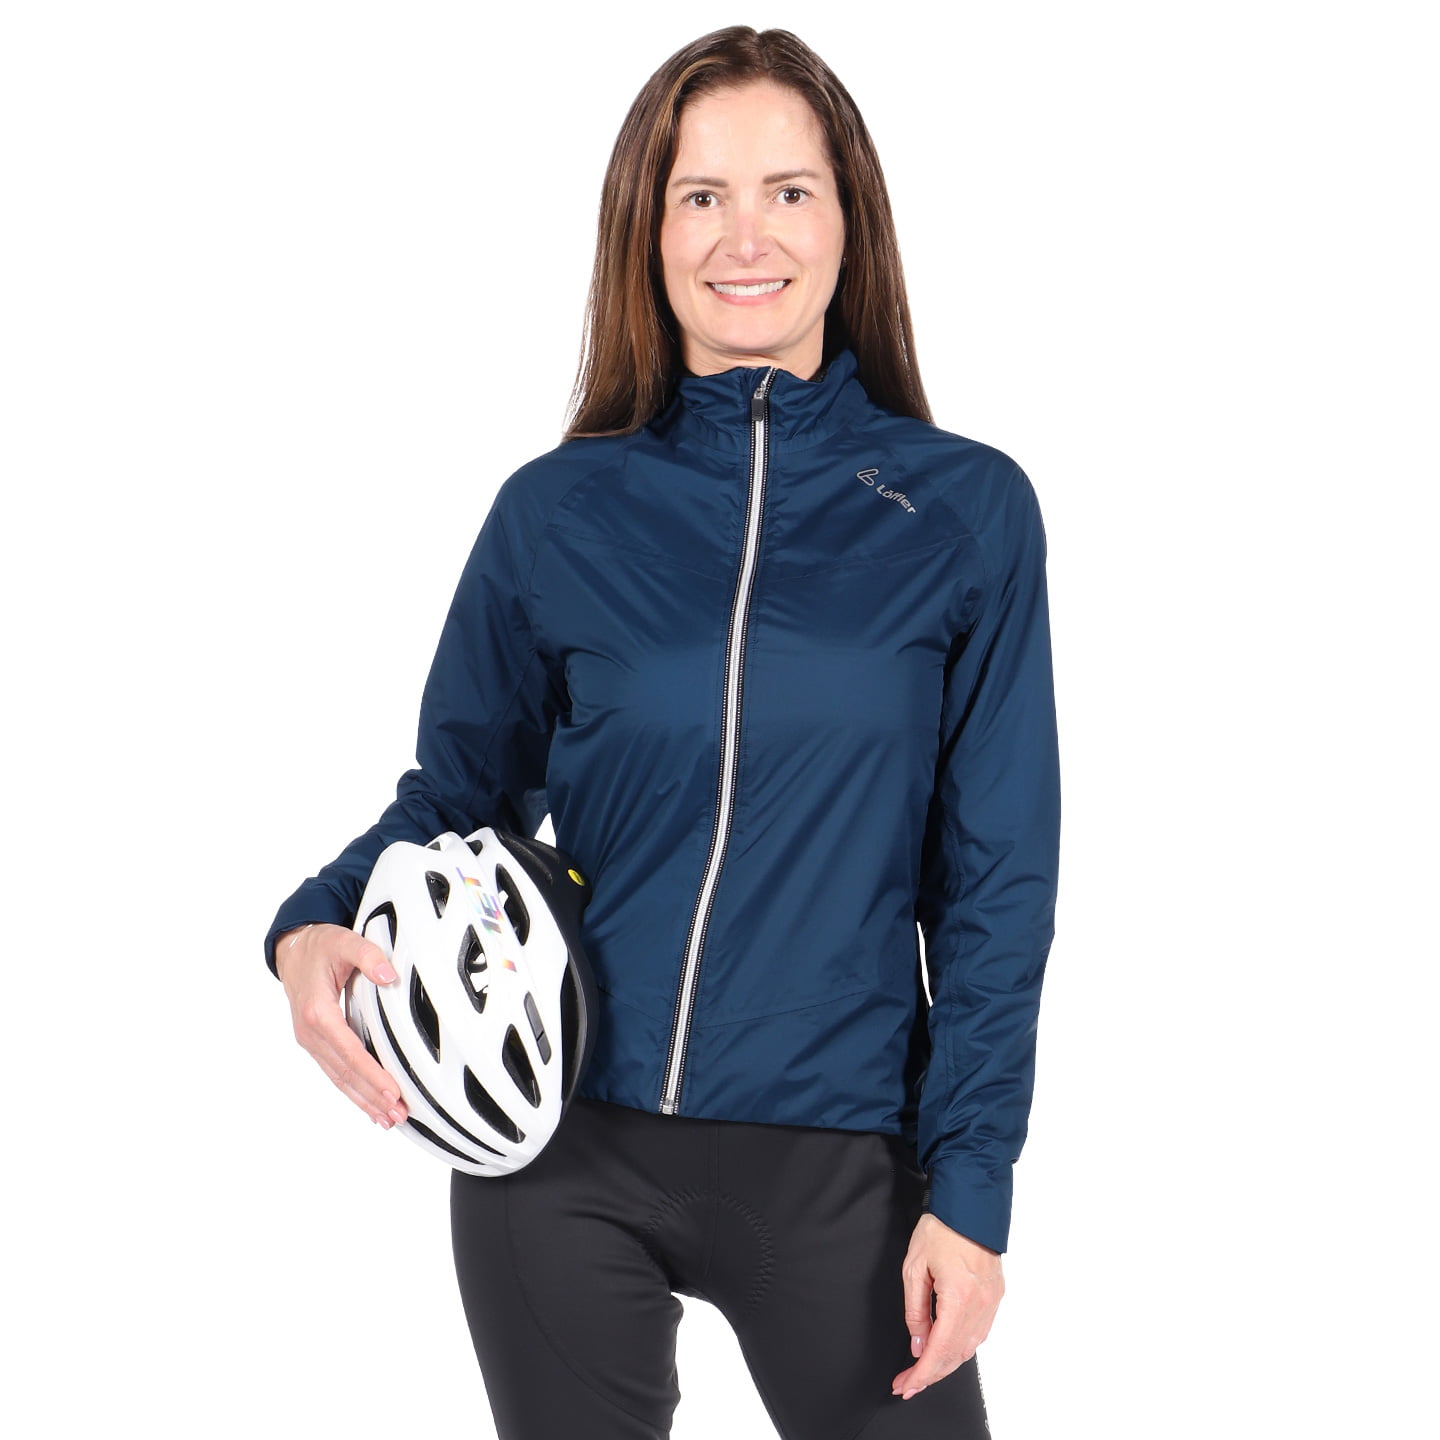 LOFFLER PL Active Women’s Winter Jacket Women’s Thermal Jacket, size 38, Cycle jacket, Cycling gear